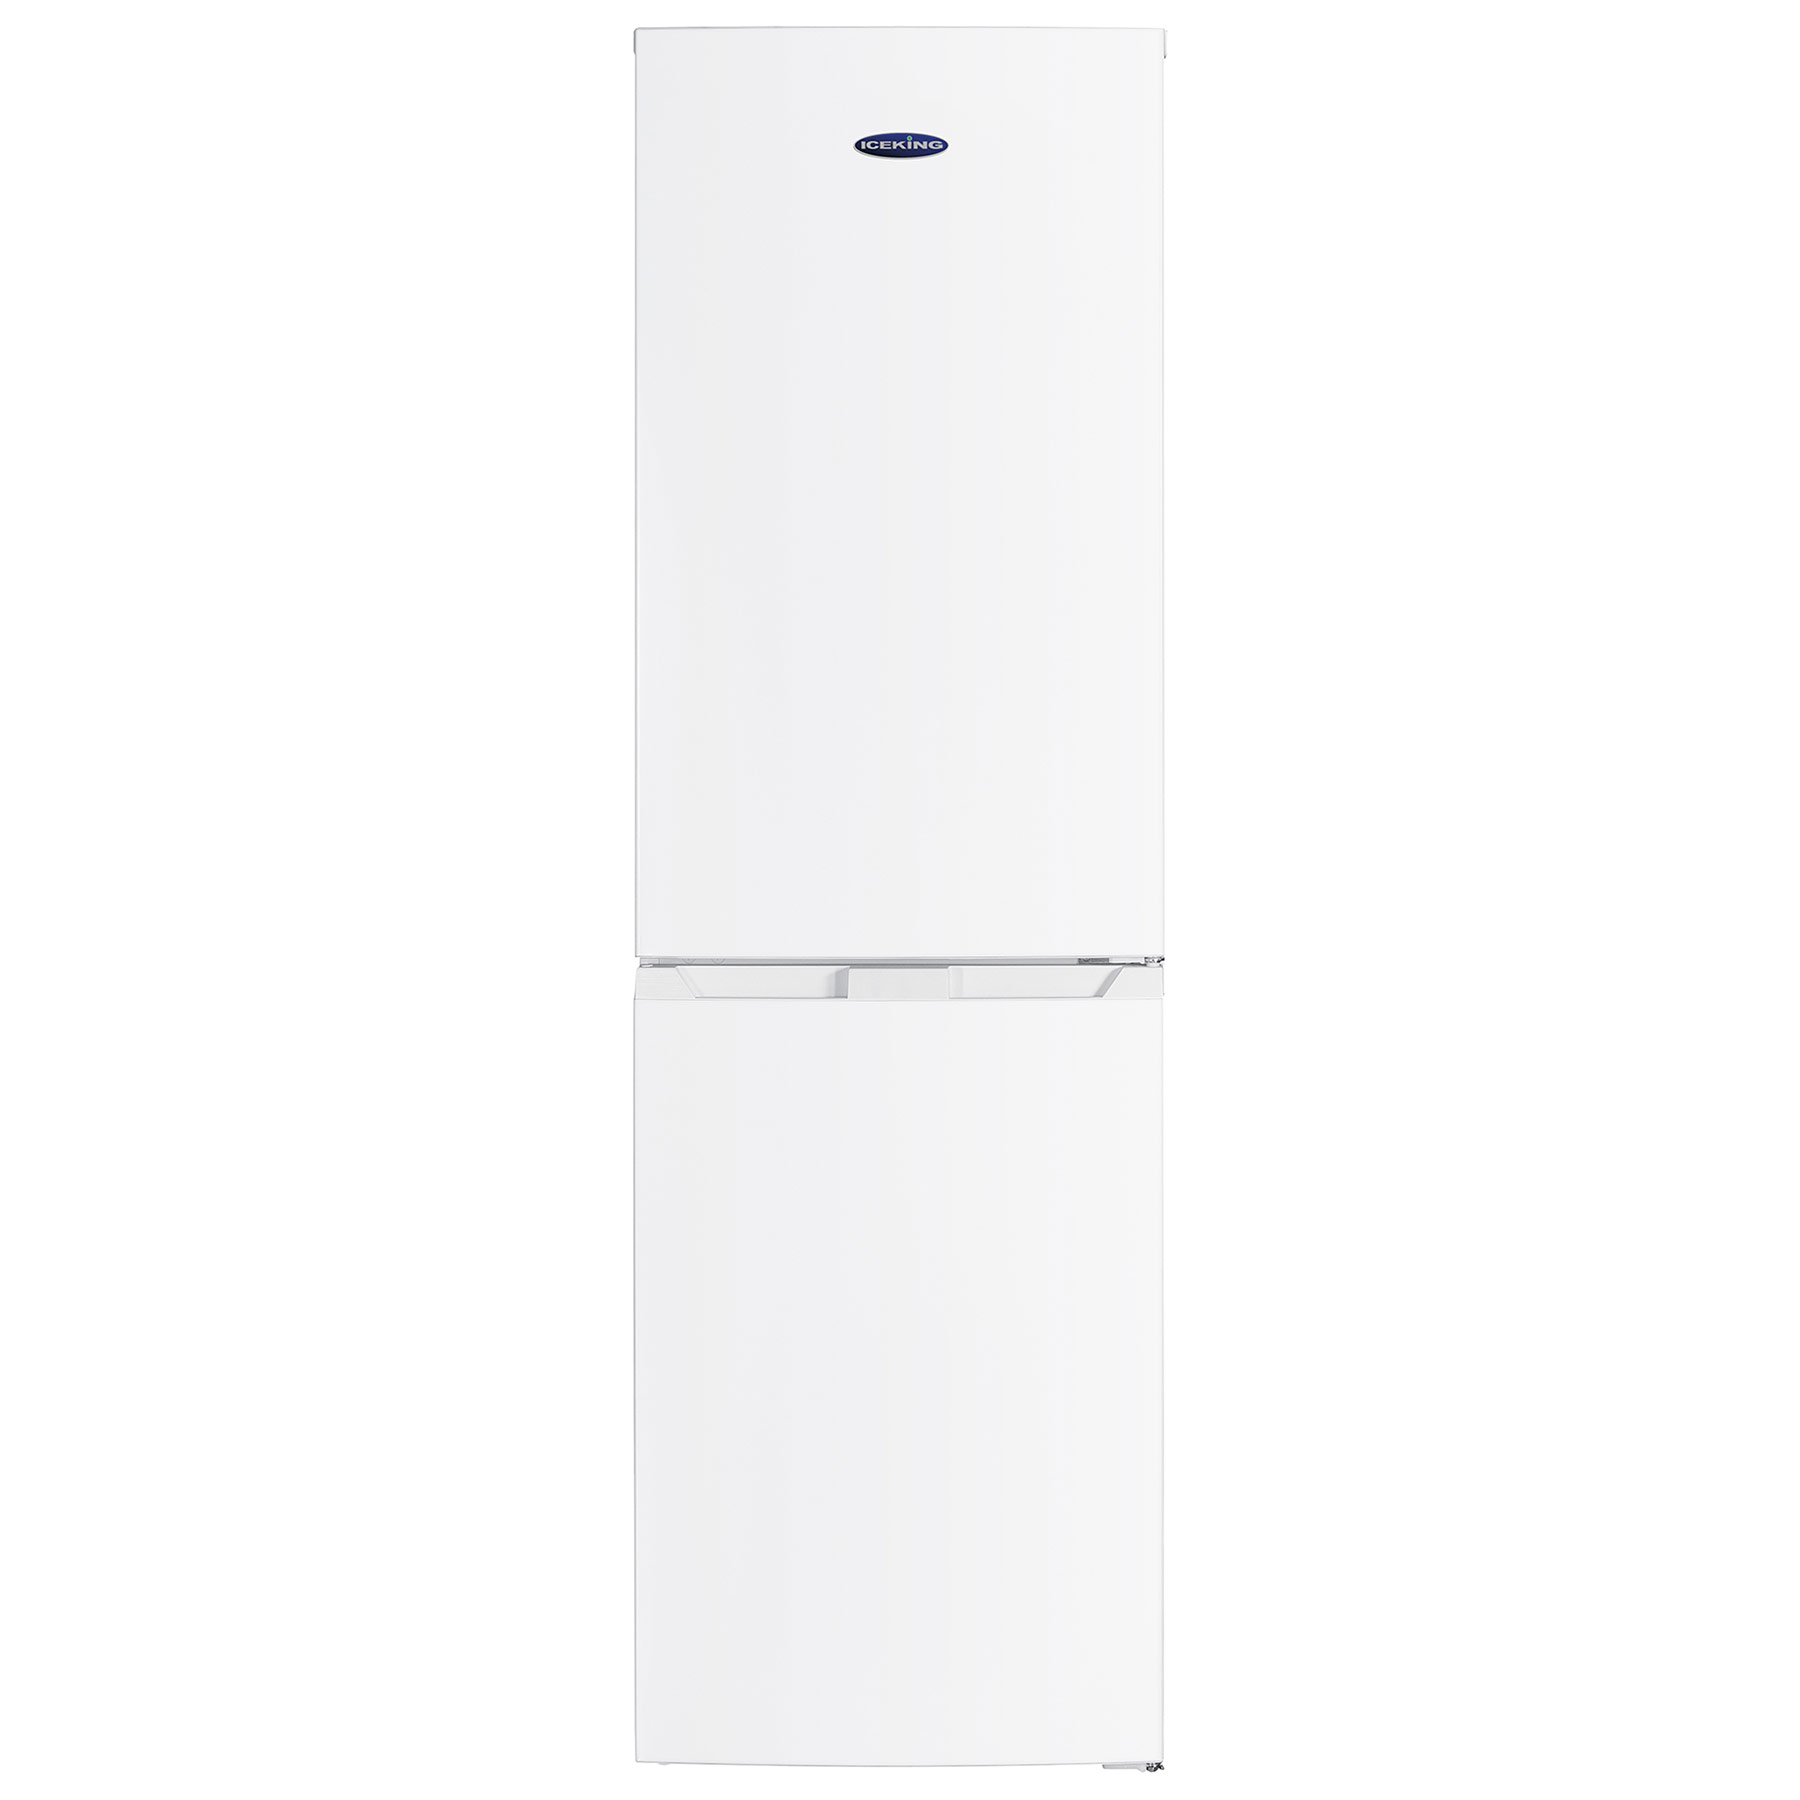 Iceking IK5050EW 55cm NoFrost Fridge Freezer in White 1 81m E Rated